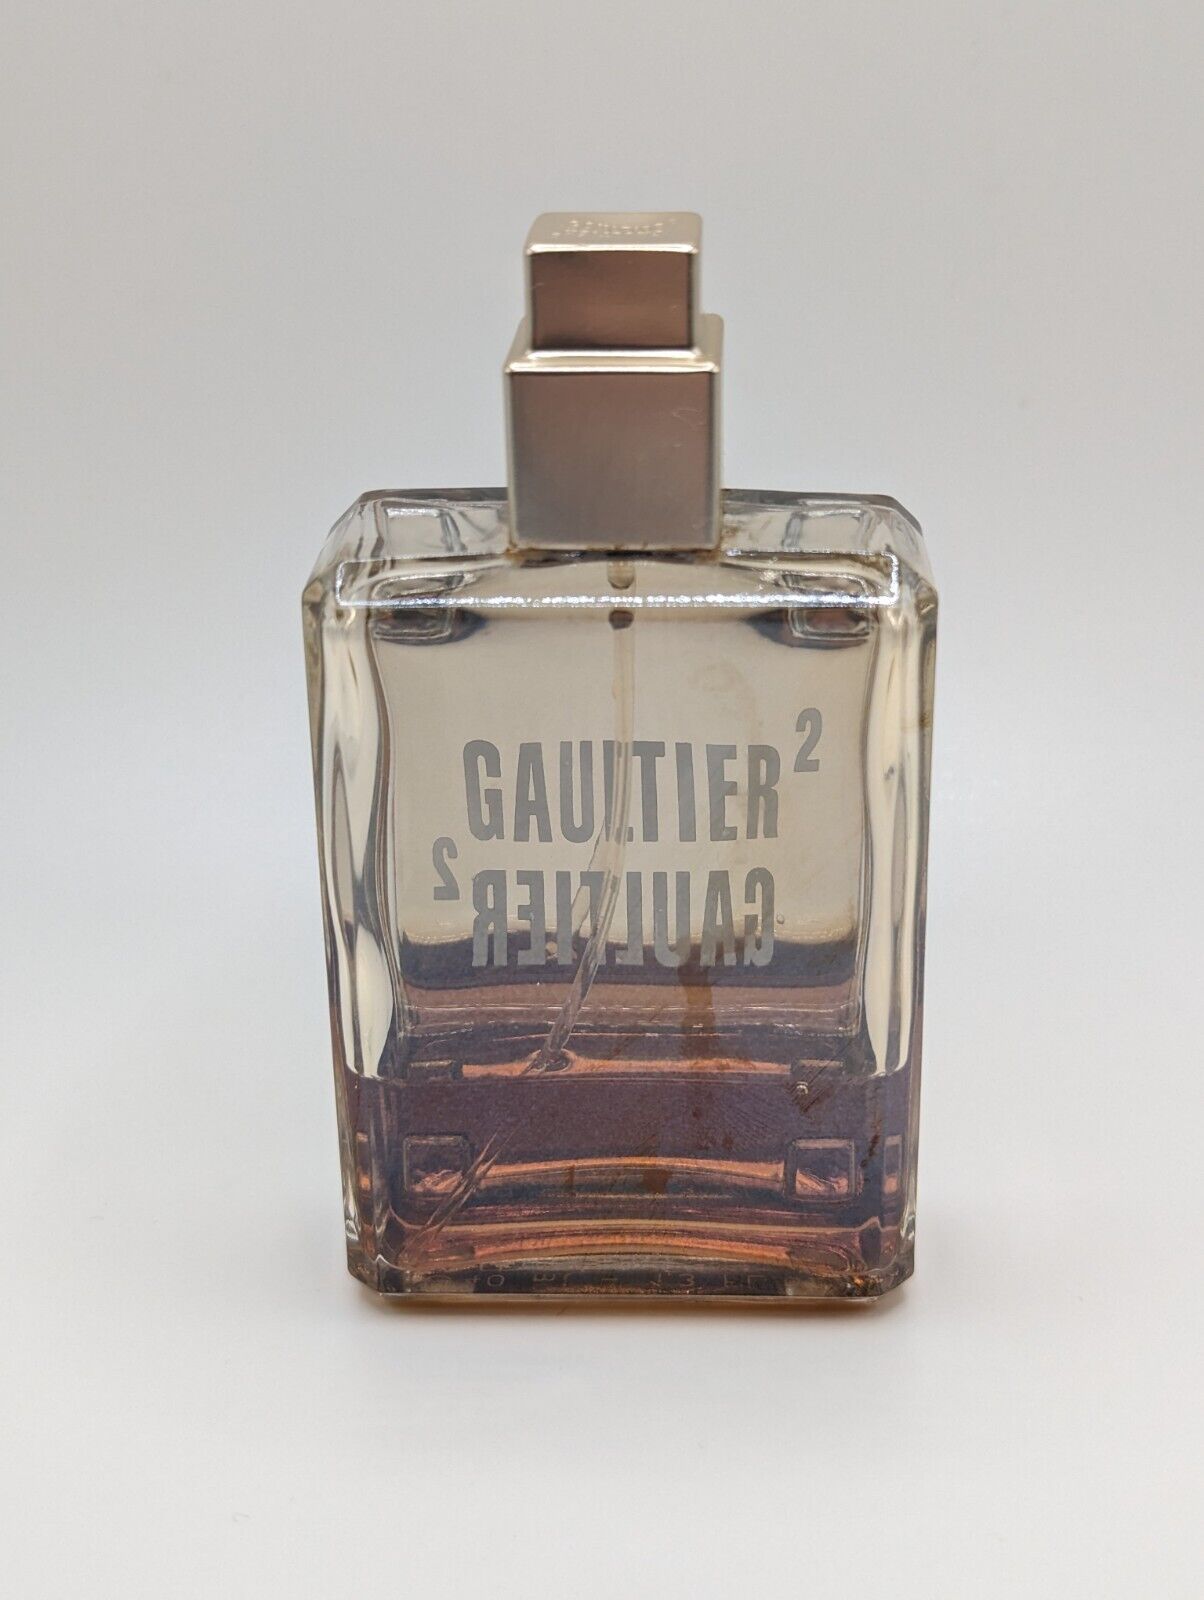 Jean Paul Gaultier Gaultier 2 Women's 1.3 oz Eau de Parfum Used